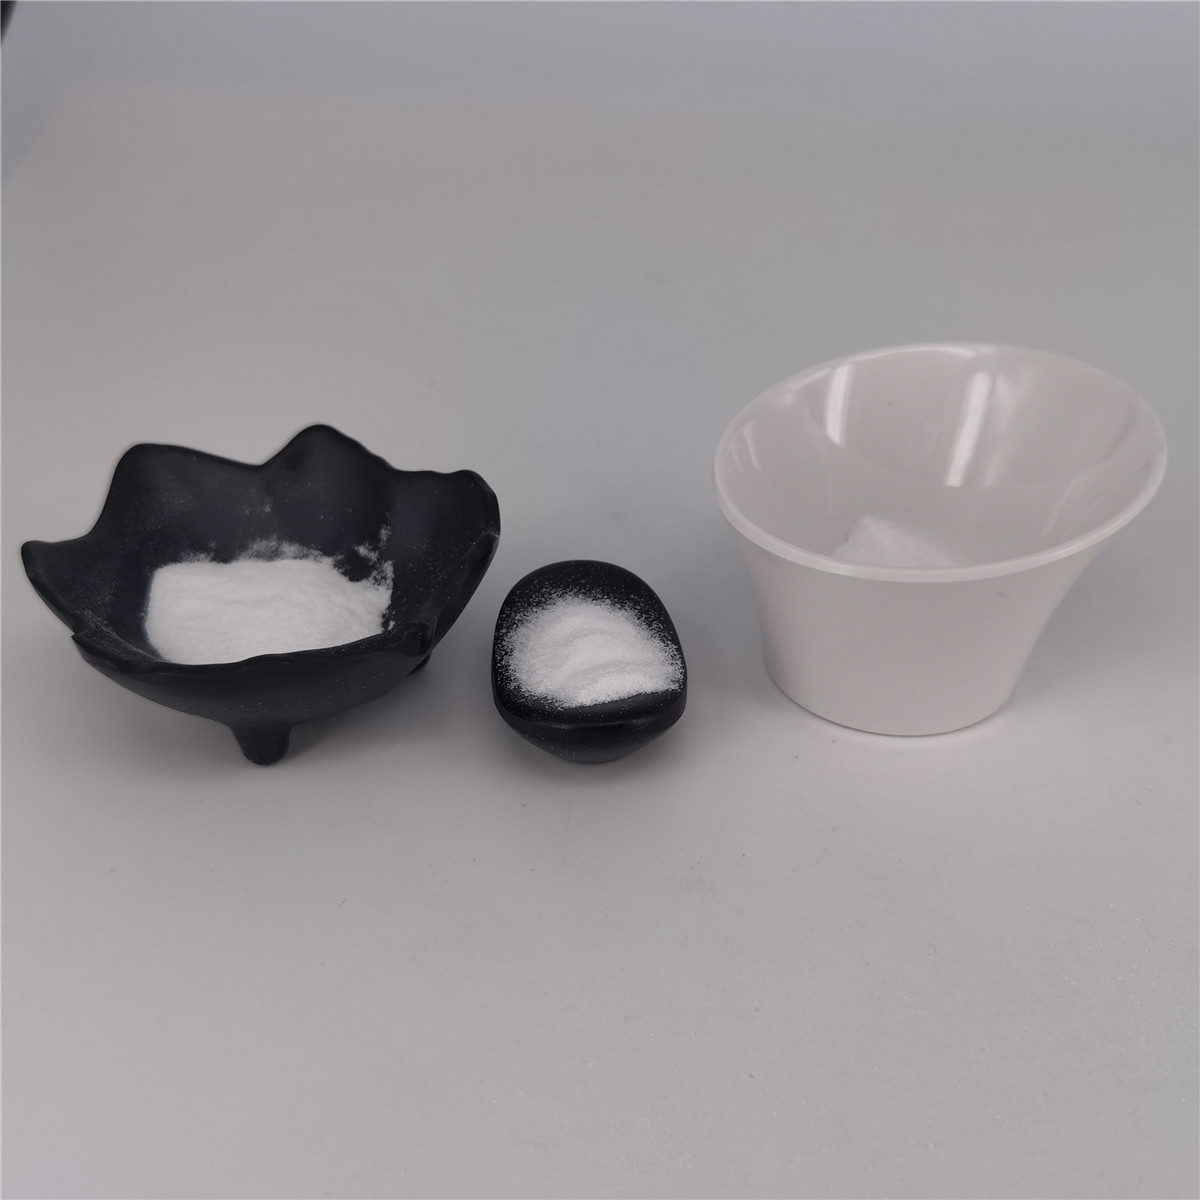  Whitening Materials White Powder Beta Arbutin CAS 497 76 7 Manufactures